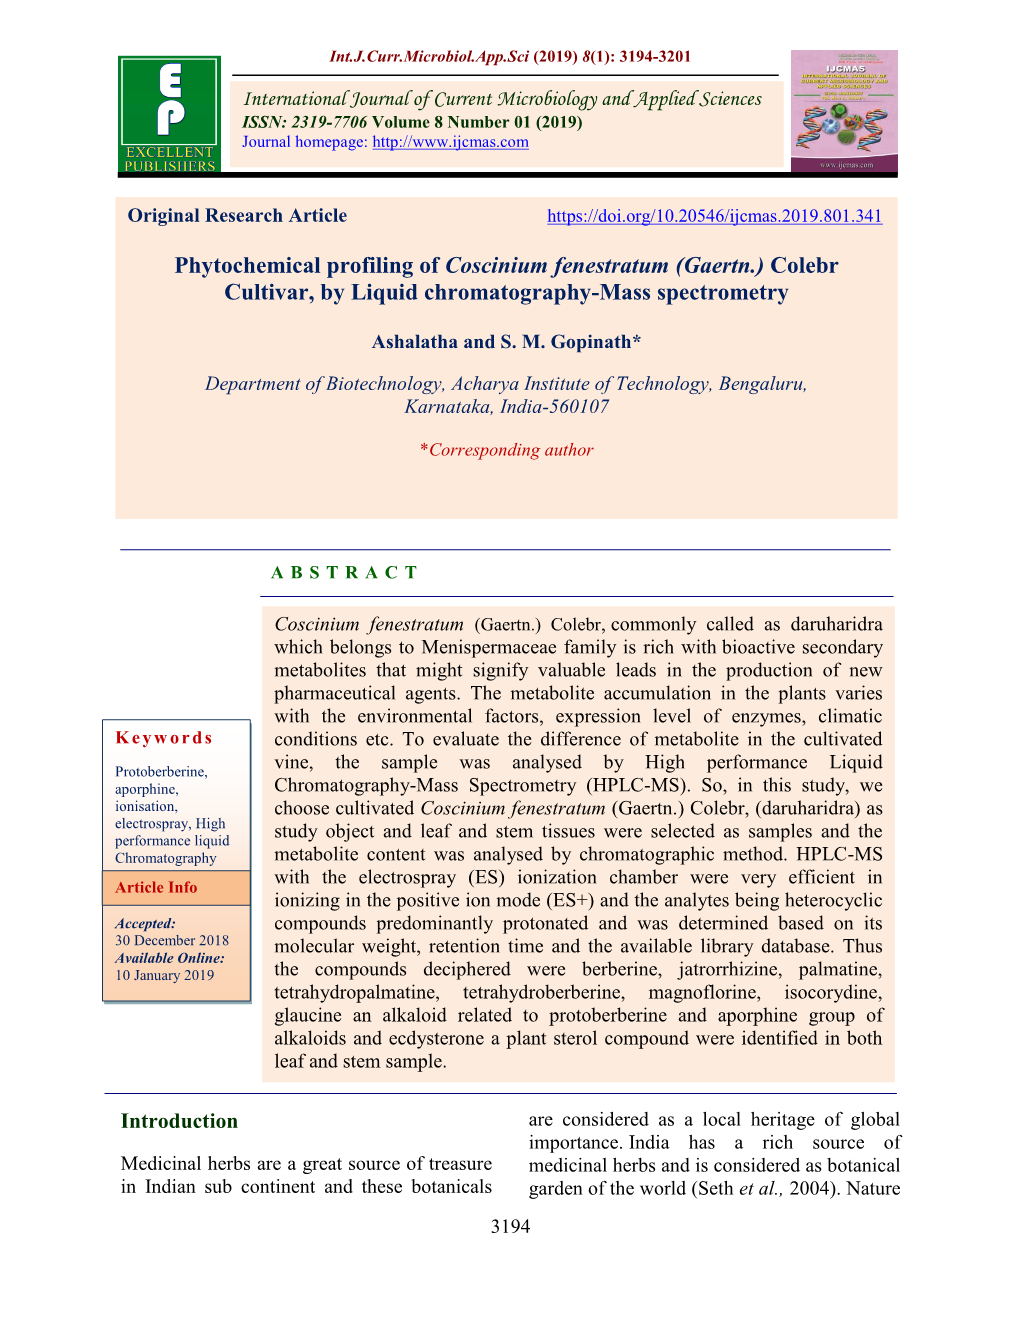 Phytochemical Profiling of Coscinium Fenestratum (Gaertn.) Colebr Cultivar, by Liquid Chromatography-Mass Spectrometry